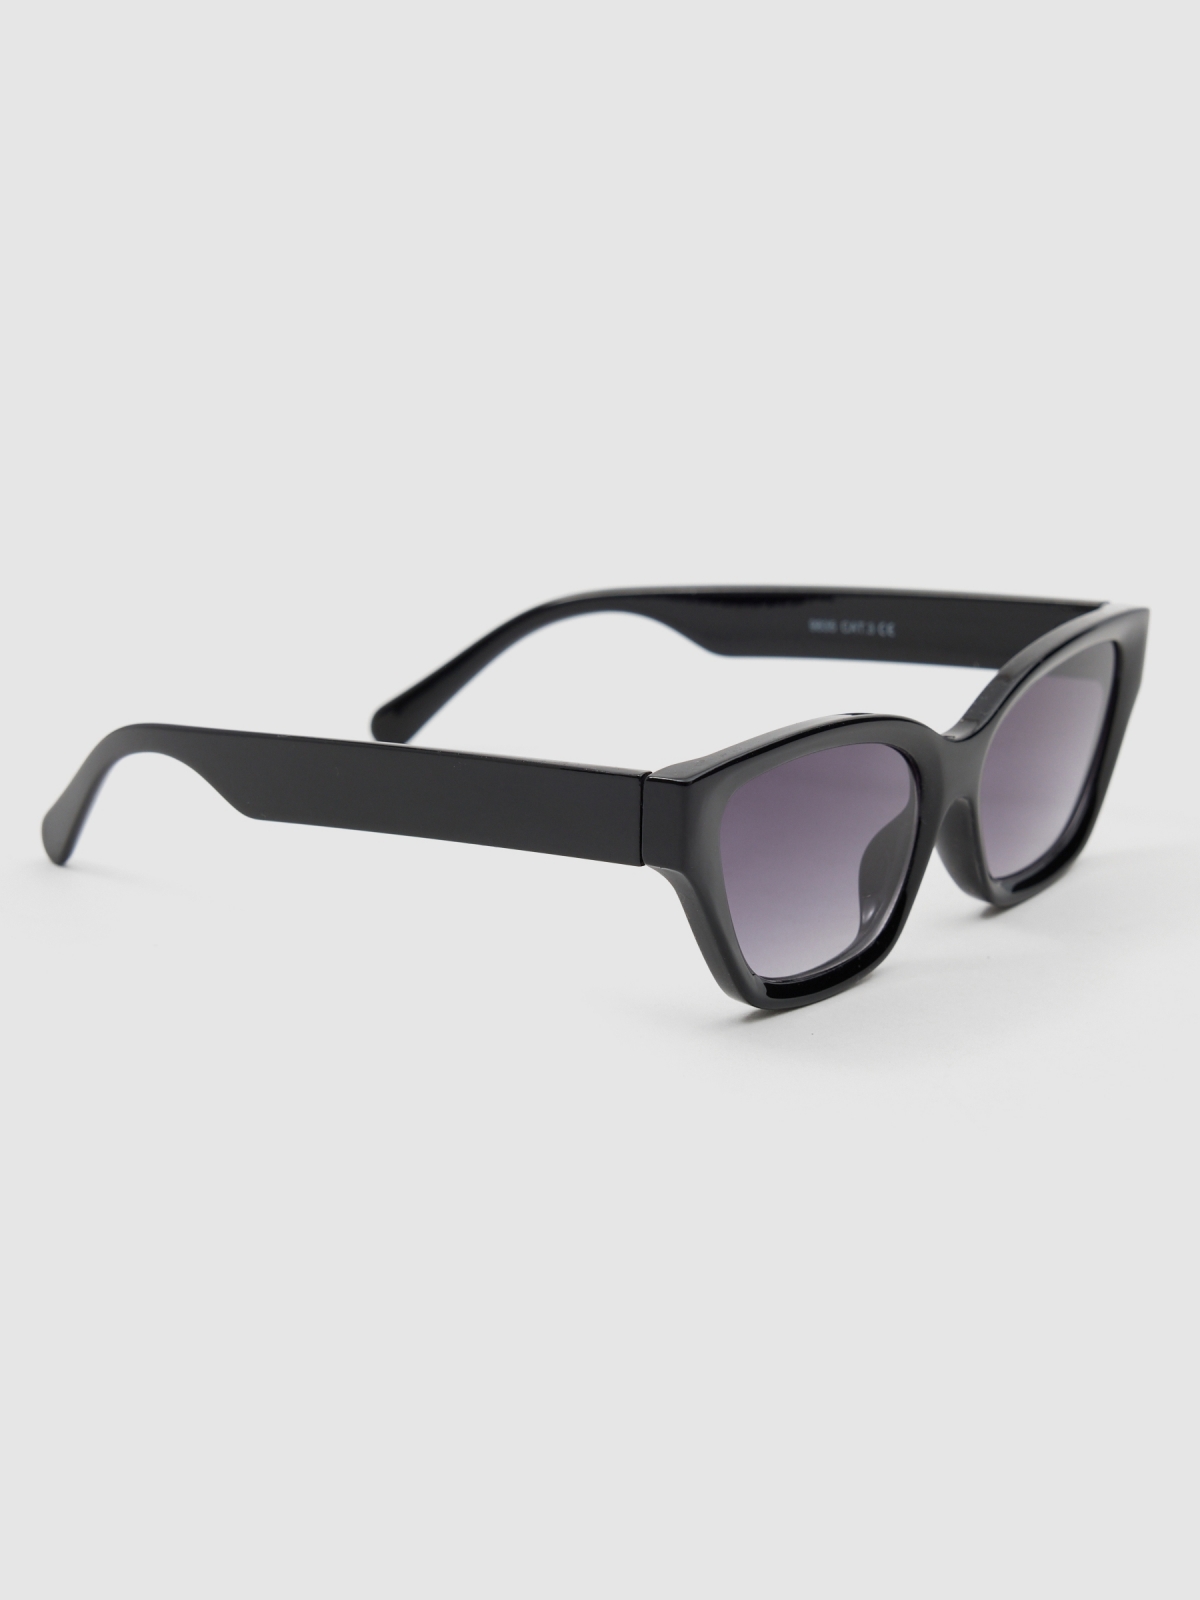 Classic sunglasses black detail view